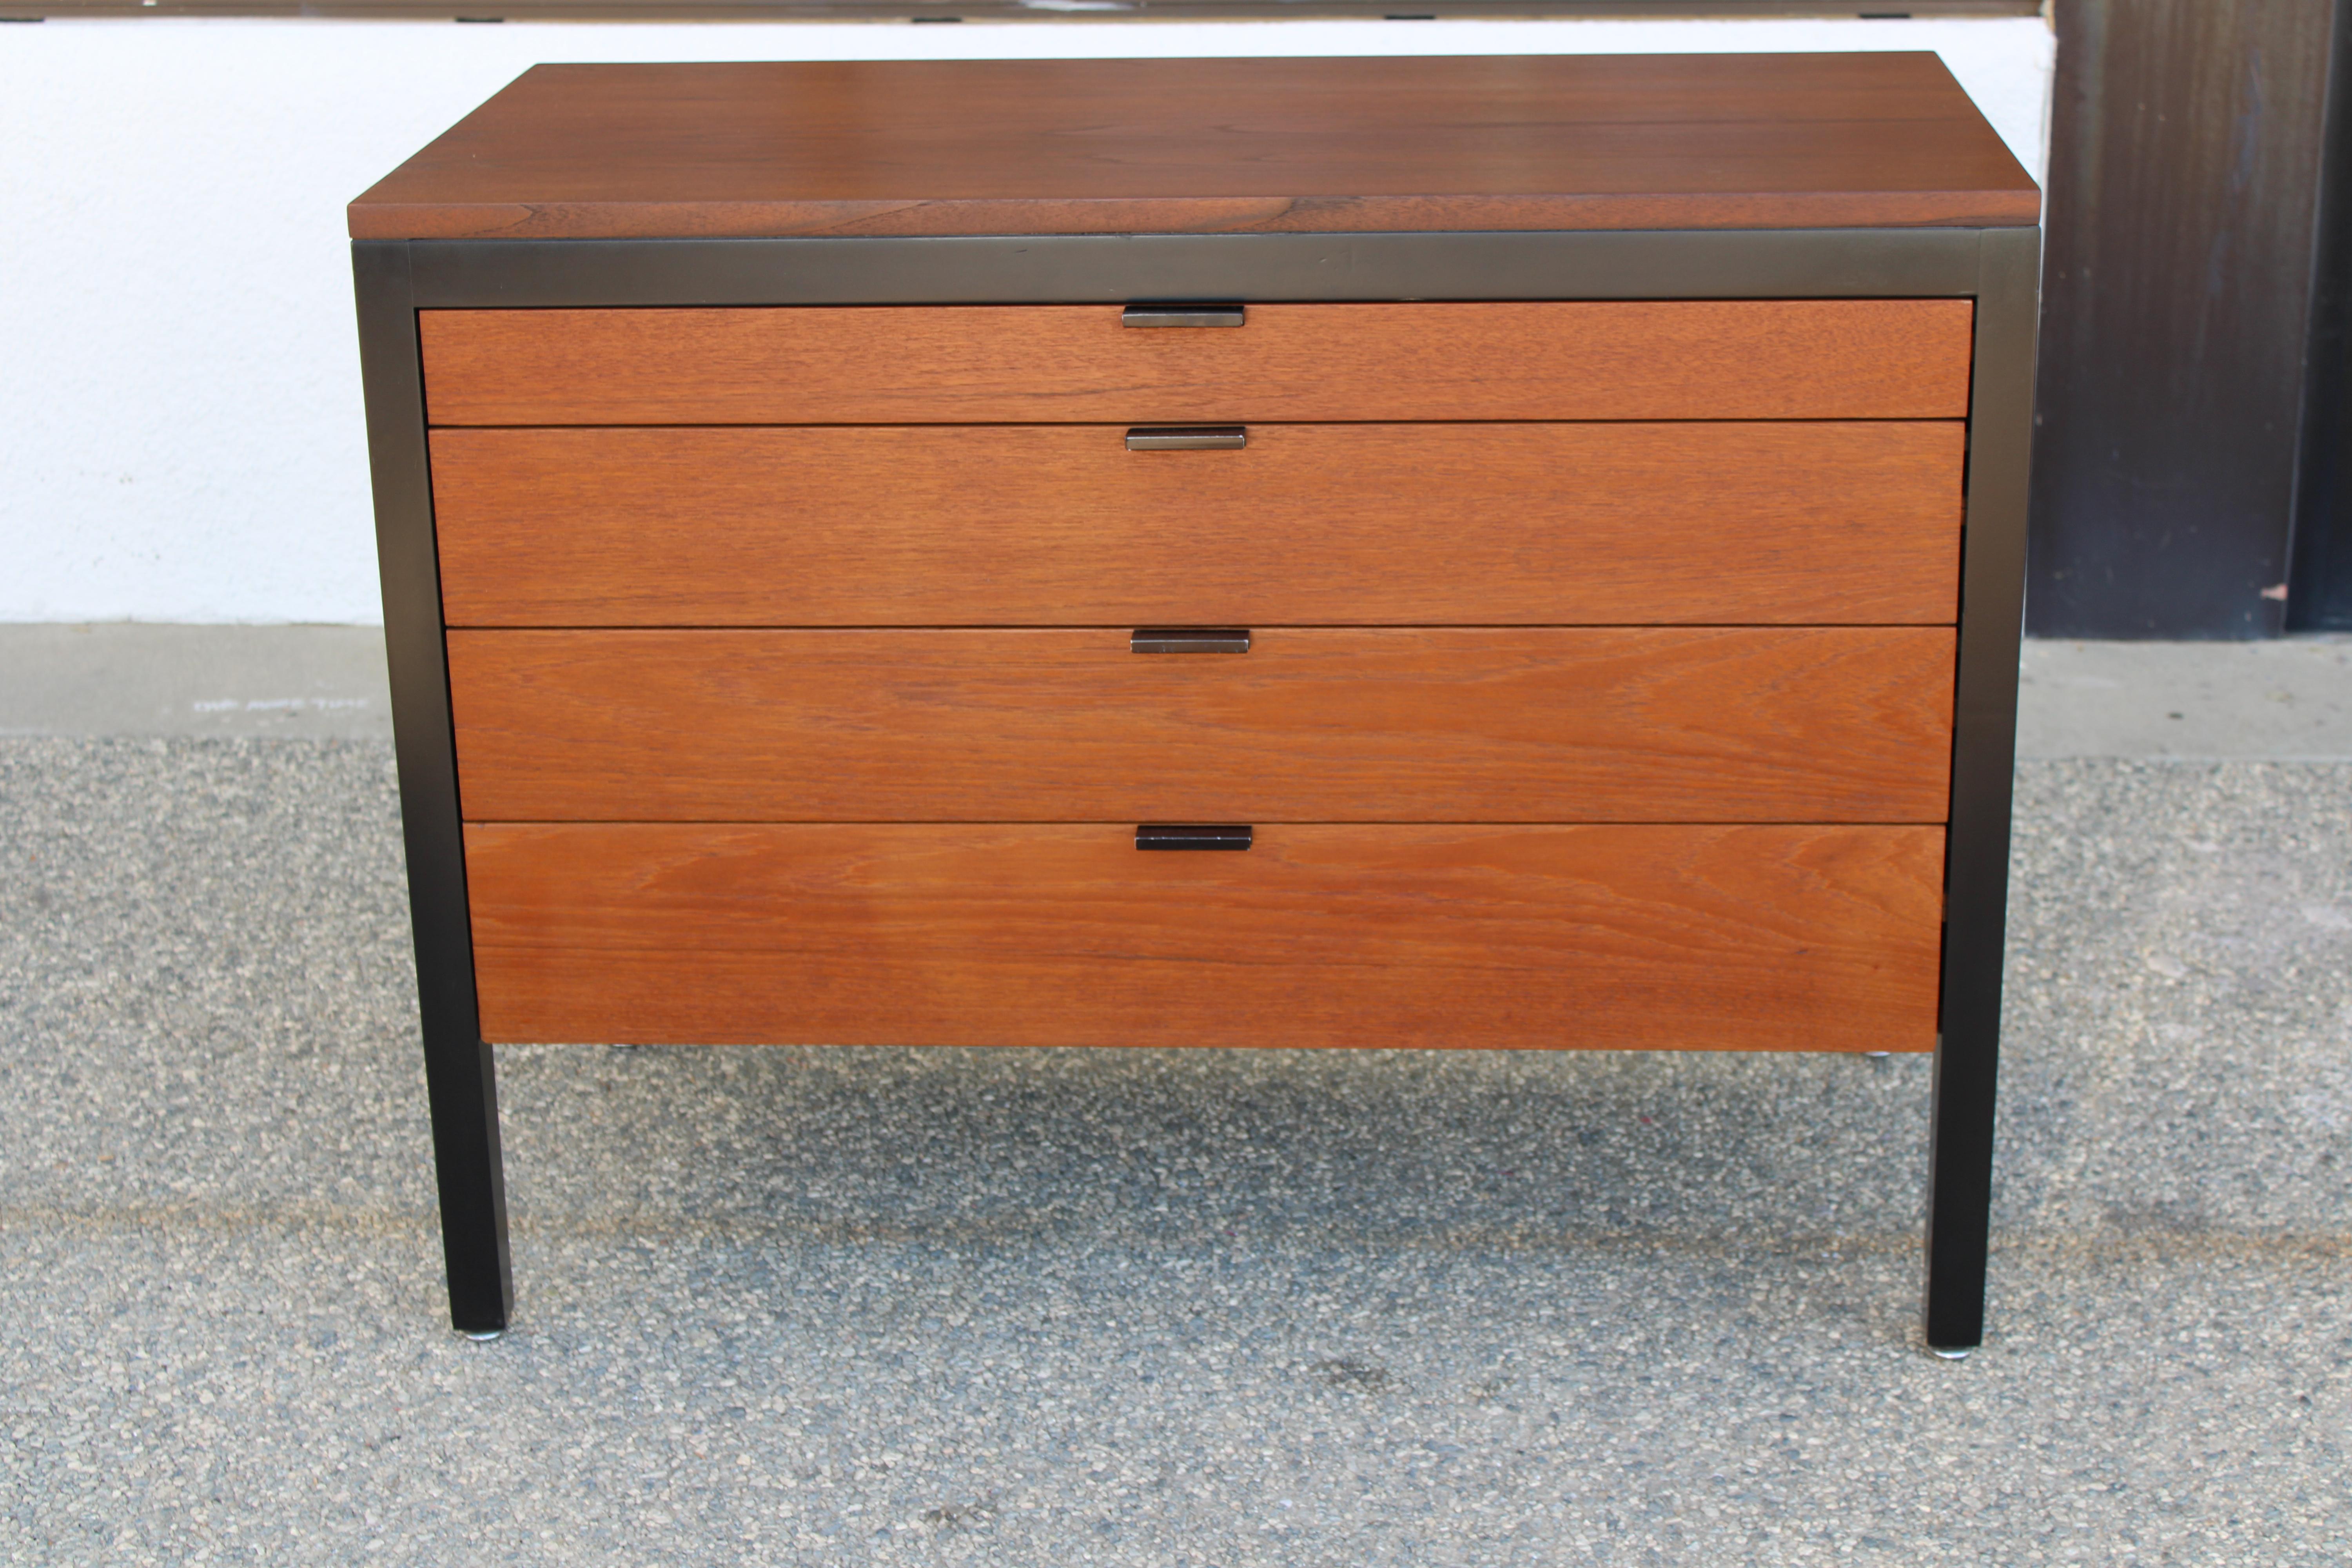 Rare dresser designed by George Nelson for Herman Miller, Zeeland, Michigan. Dresser measures 38.5